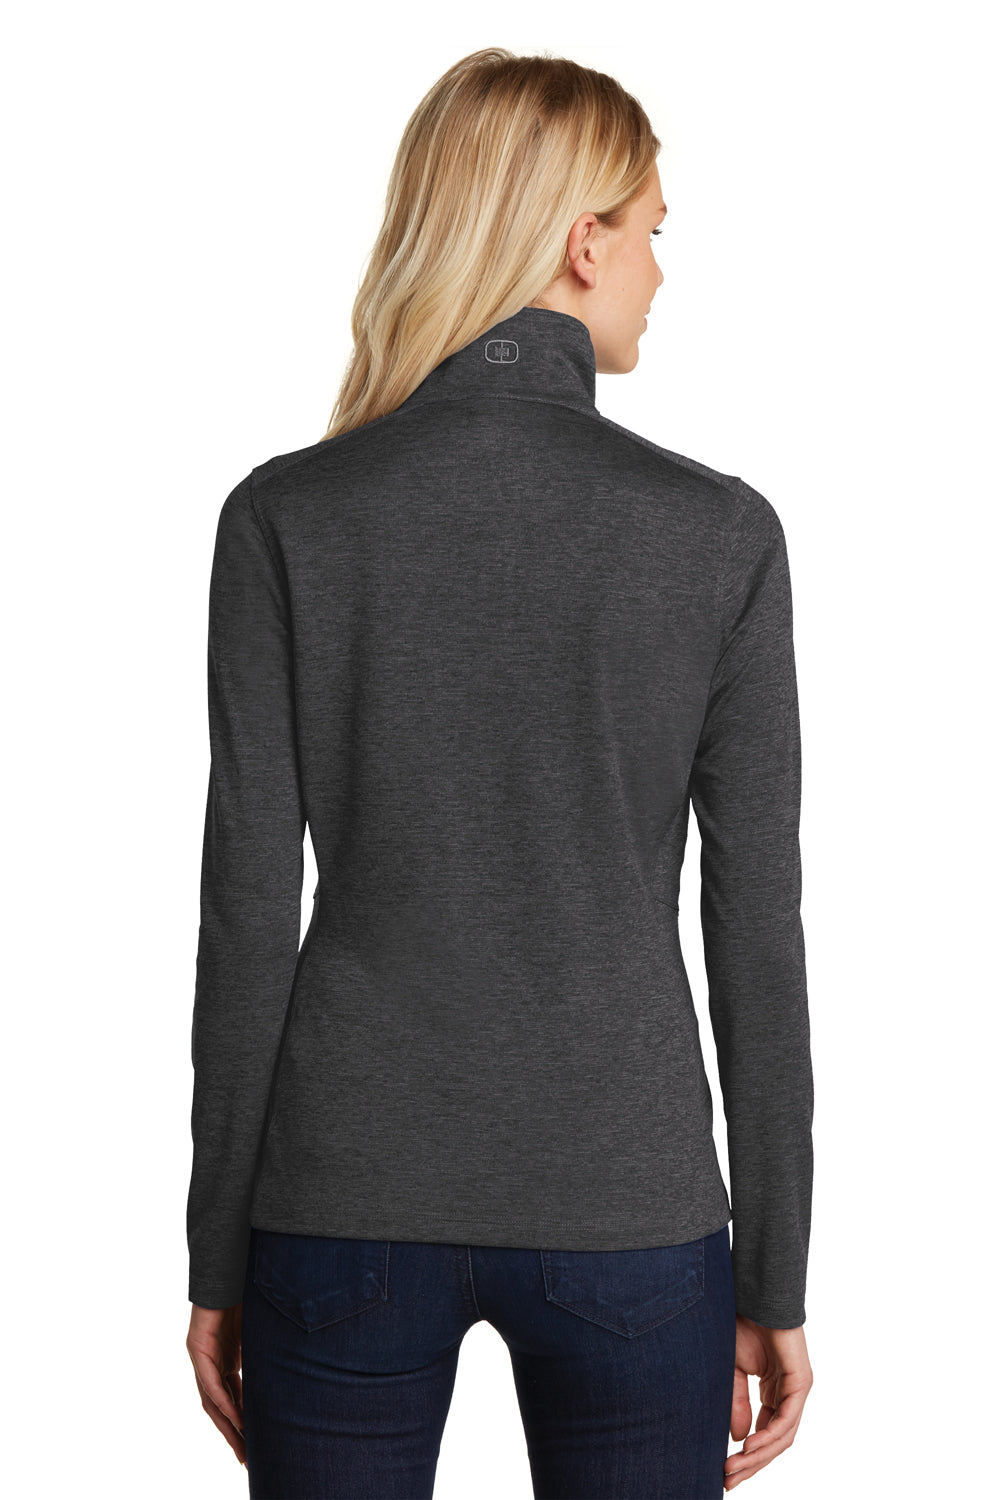 Ogio LOG203 Womens Pixel Moisture Wicking Full Zip Sweatshirt Black Back